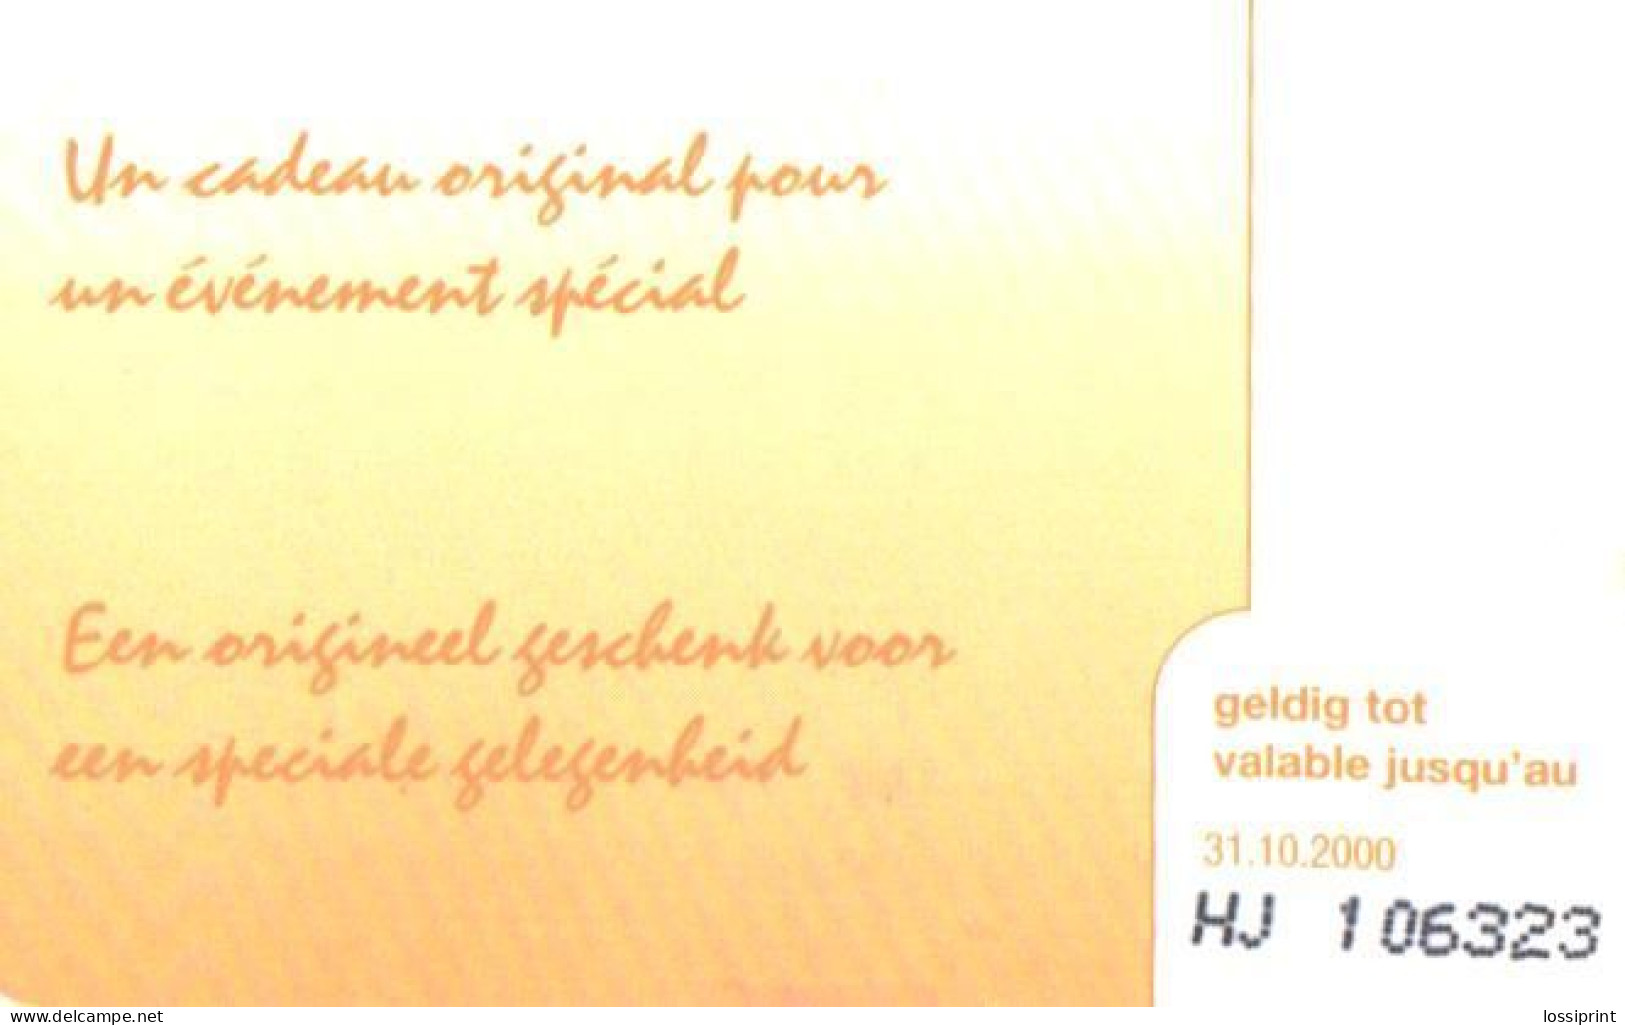 Belgium:Used Phonecard, Belgacom, 200 BEF, Disney, Mickey And Minnie Mouse, 2000 - Met Chip